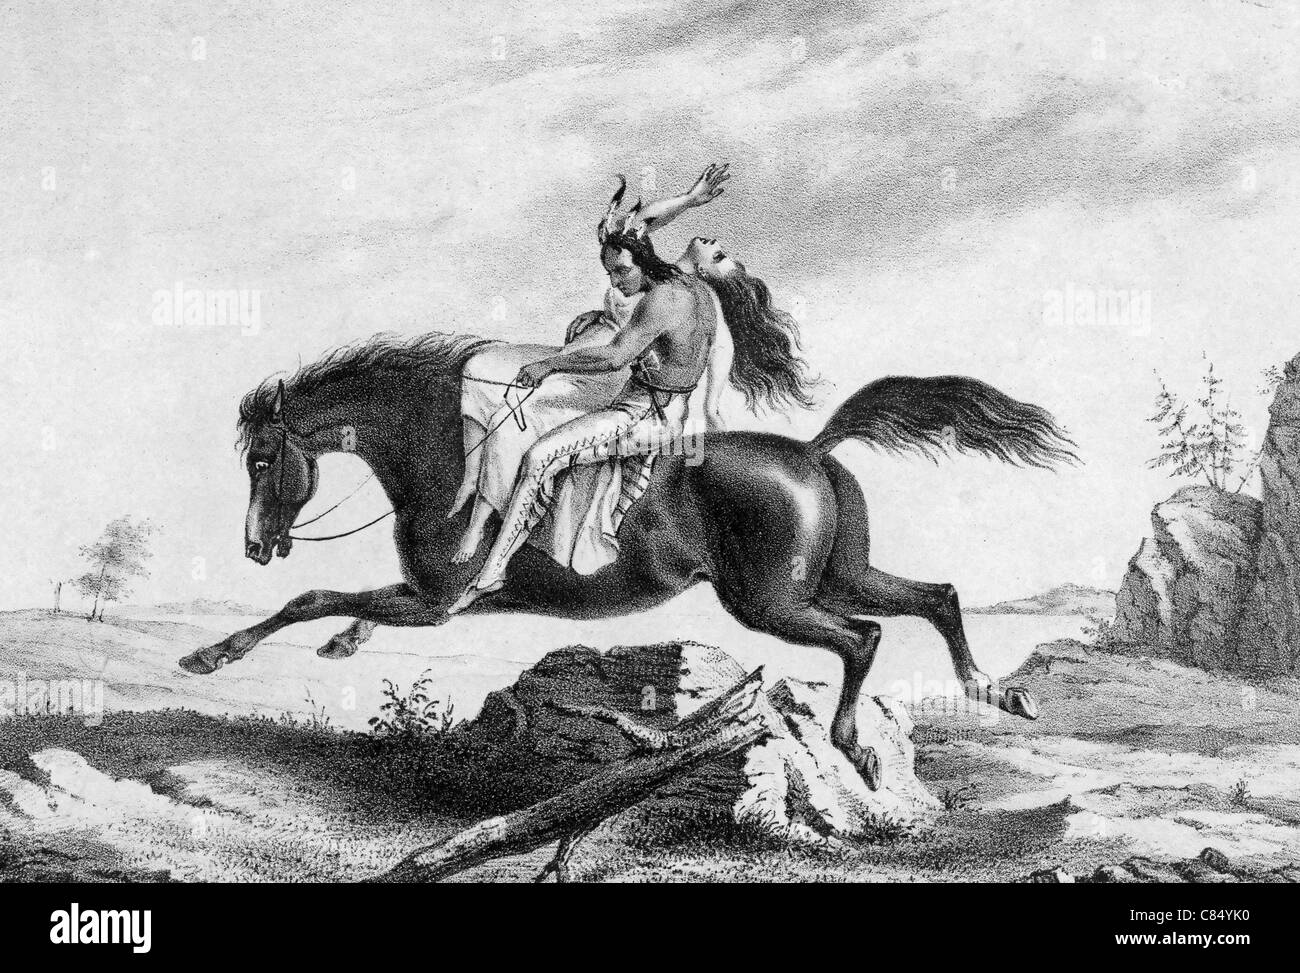 Print of American Indian man on horseback with struggling Caucasian woman, circa 1813 Stock Photo